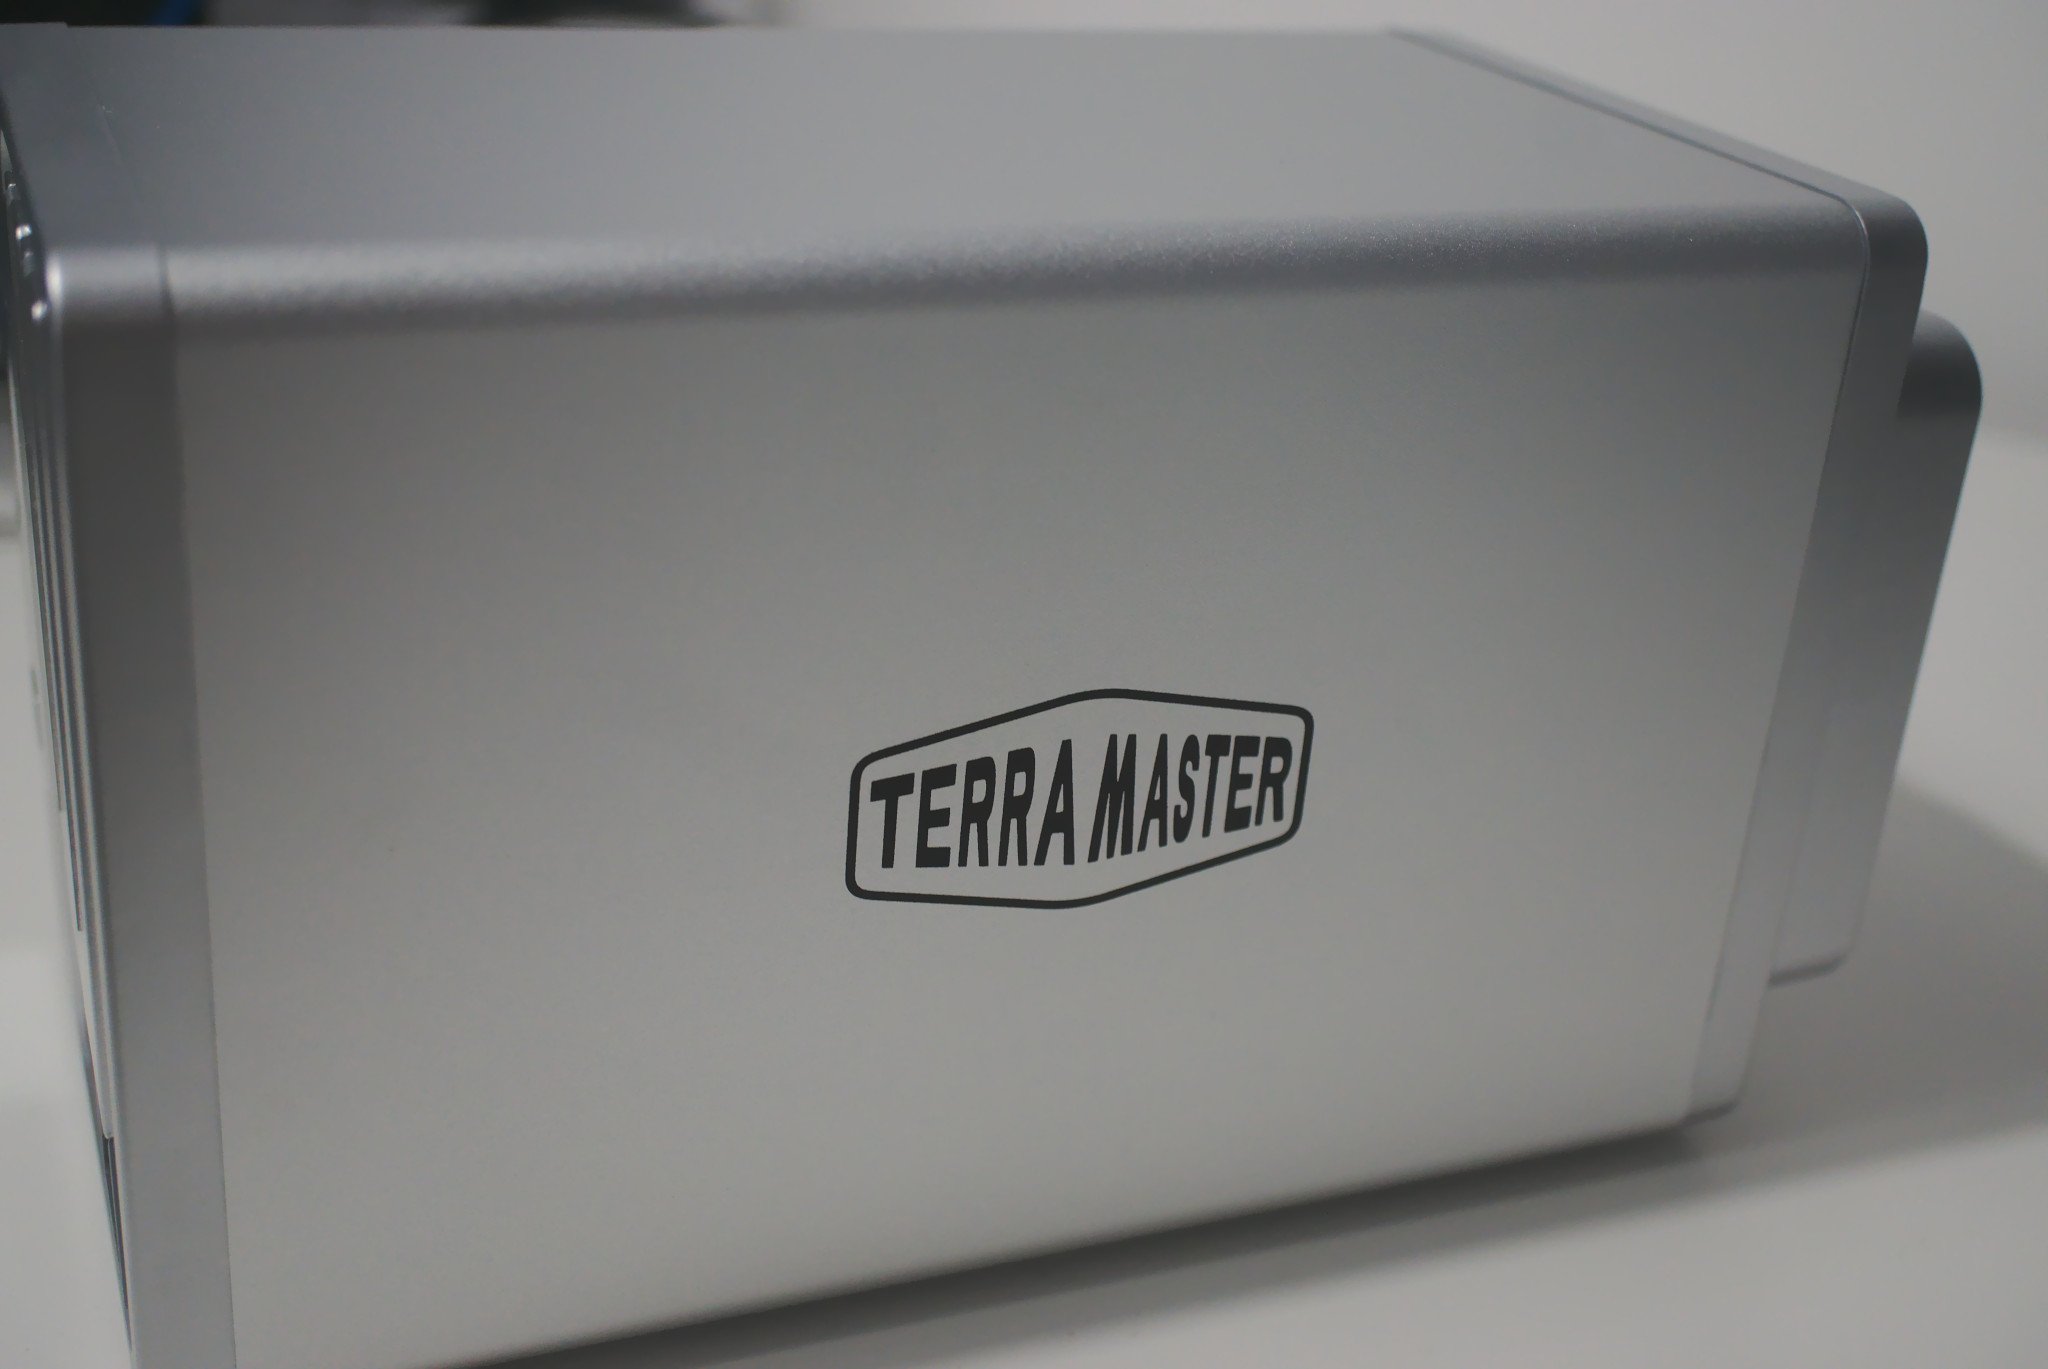 terramaster-f2-210-side-logo-close.jpg